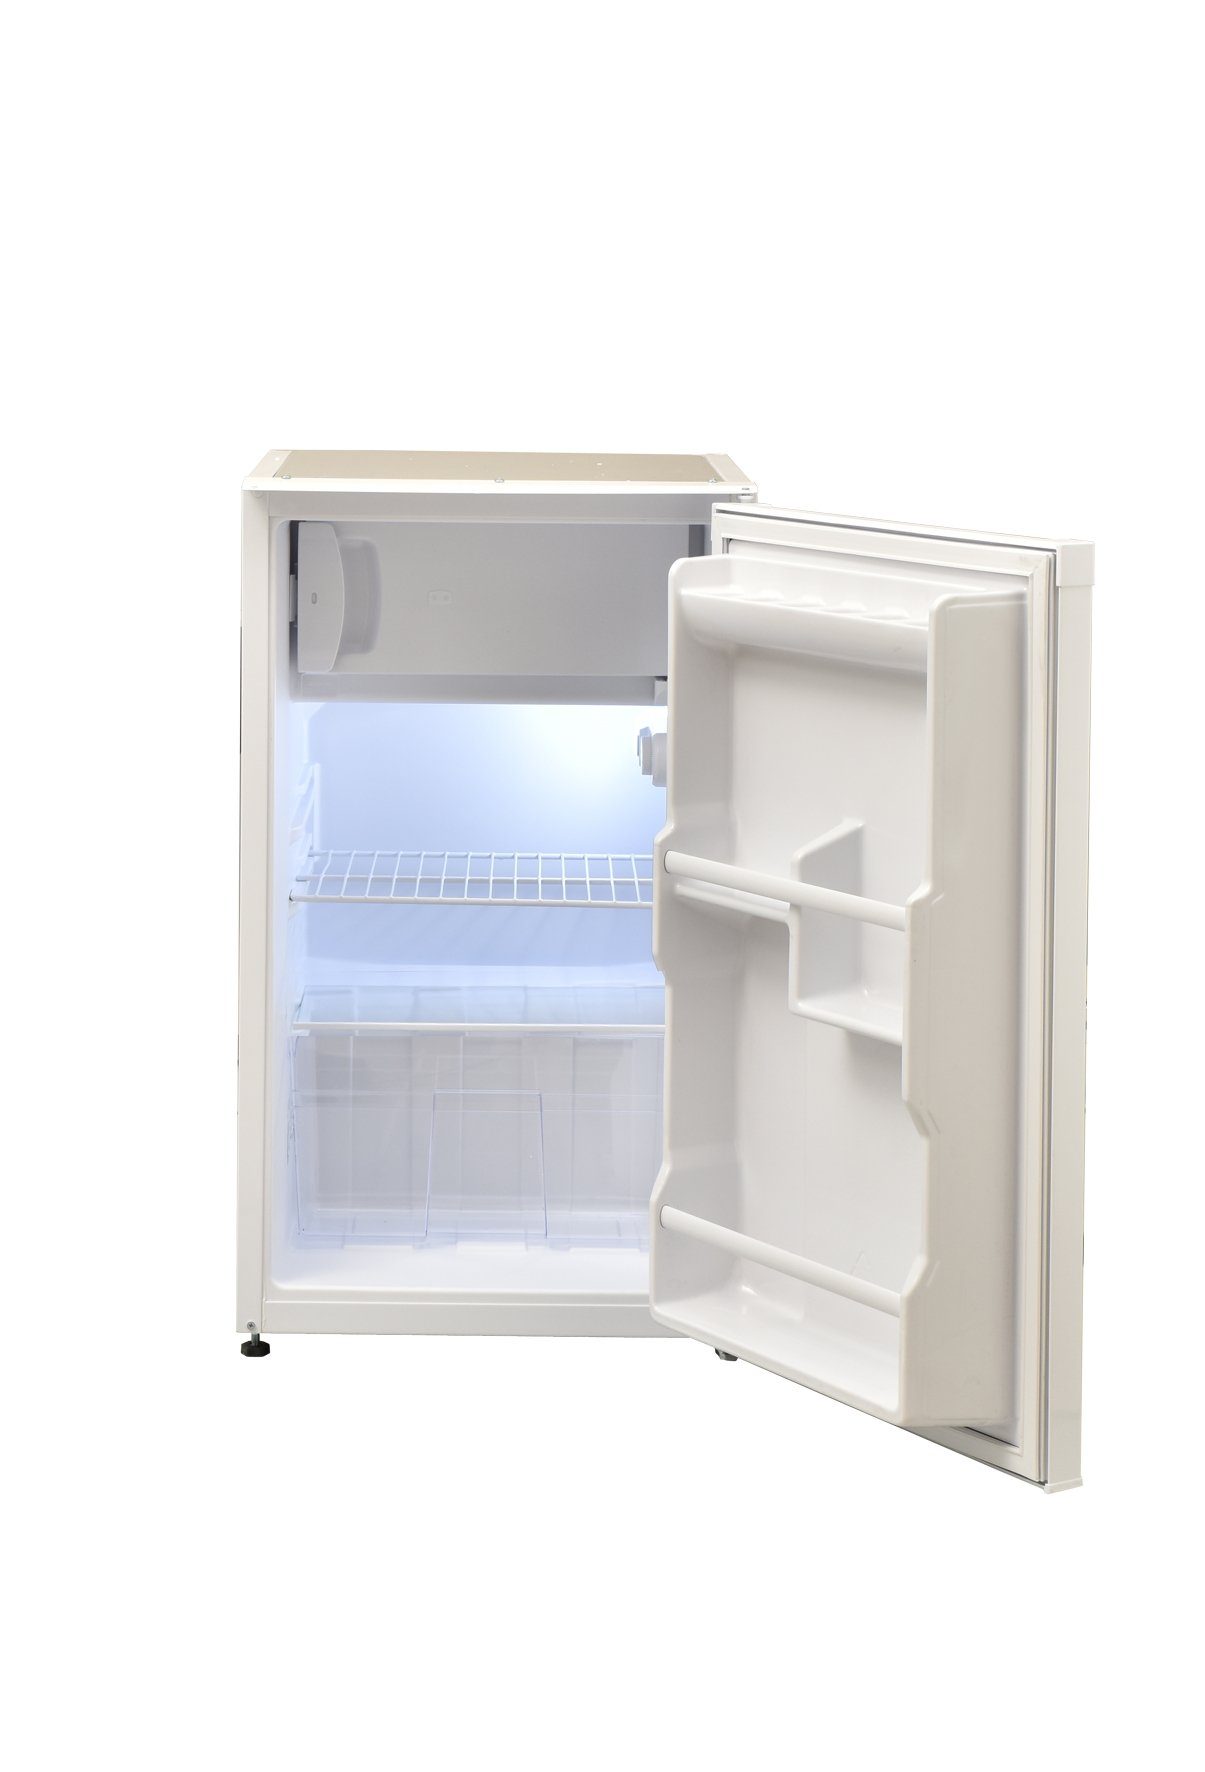 Kühlschrank KSU50 mit Unterbaufähig Gefrierfach RESPEKTA